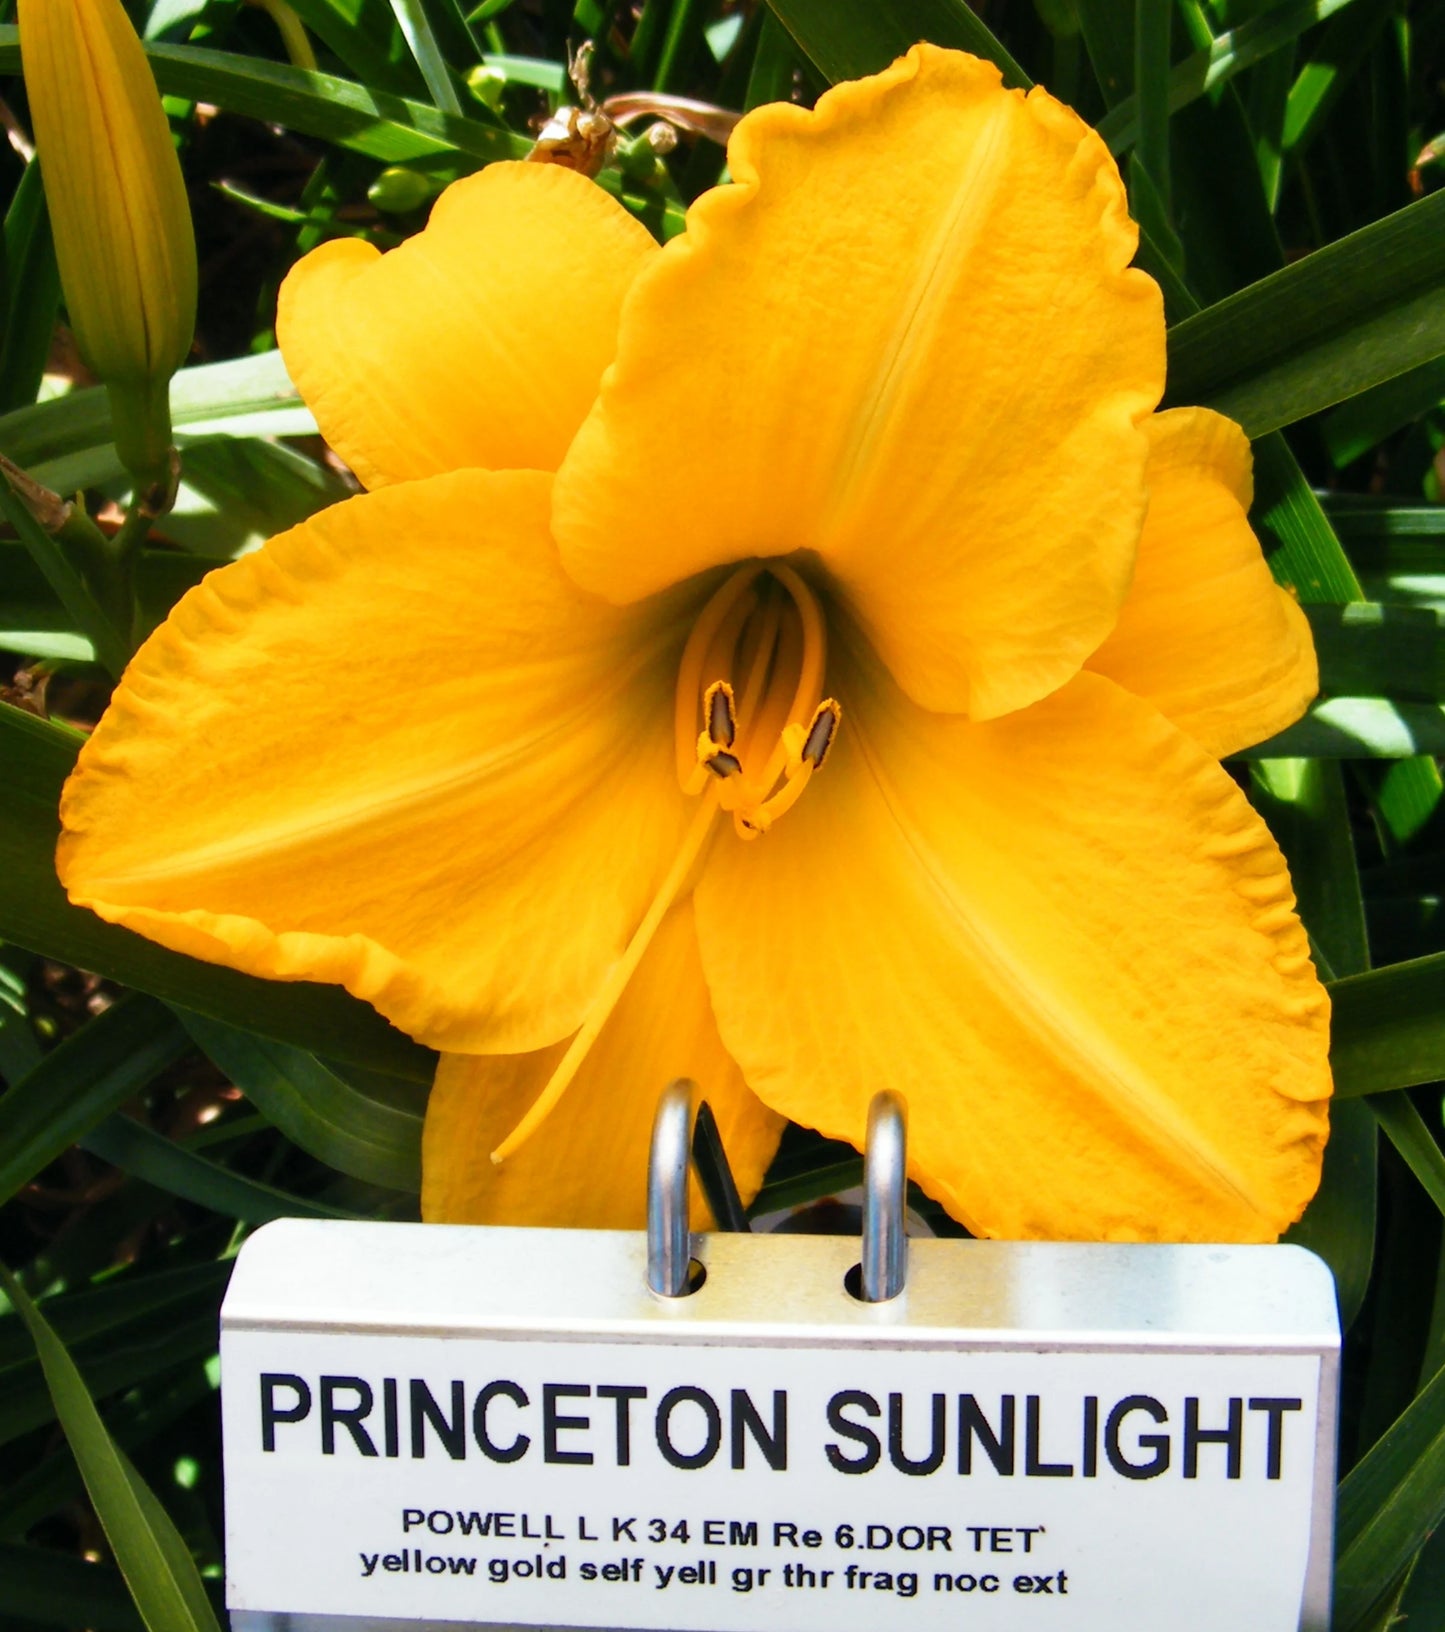 PRINCETON SUNLIGHT